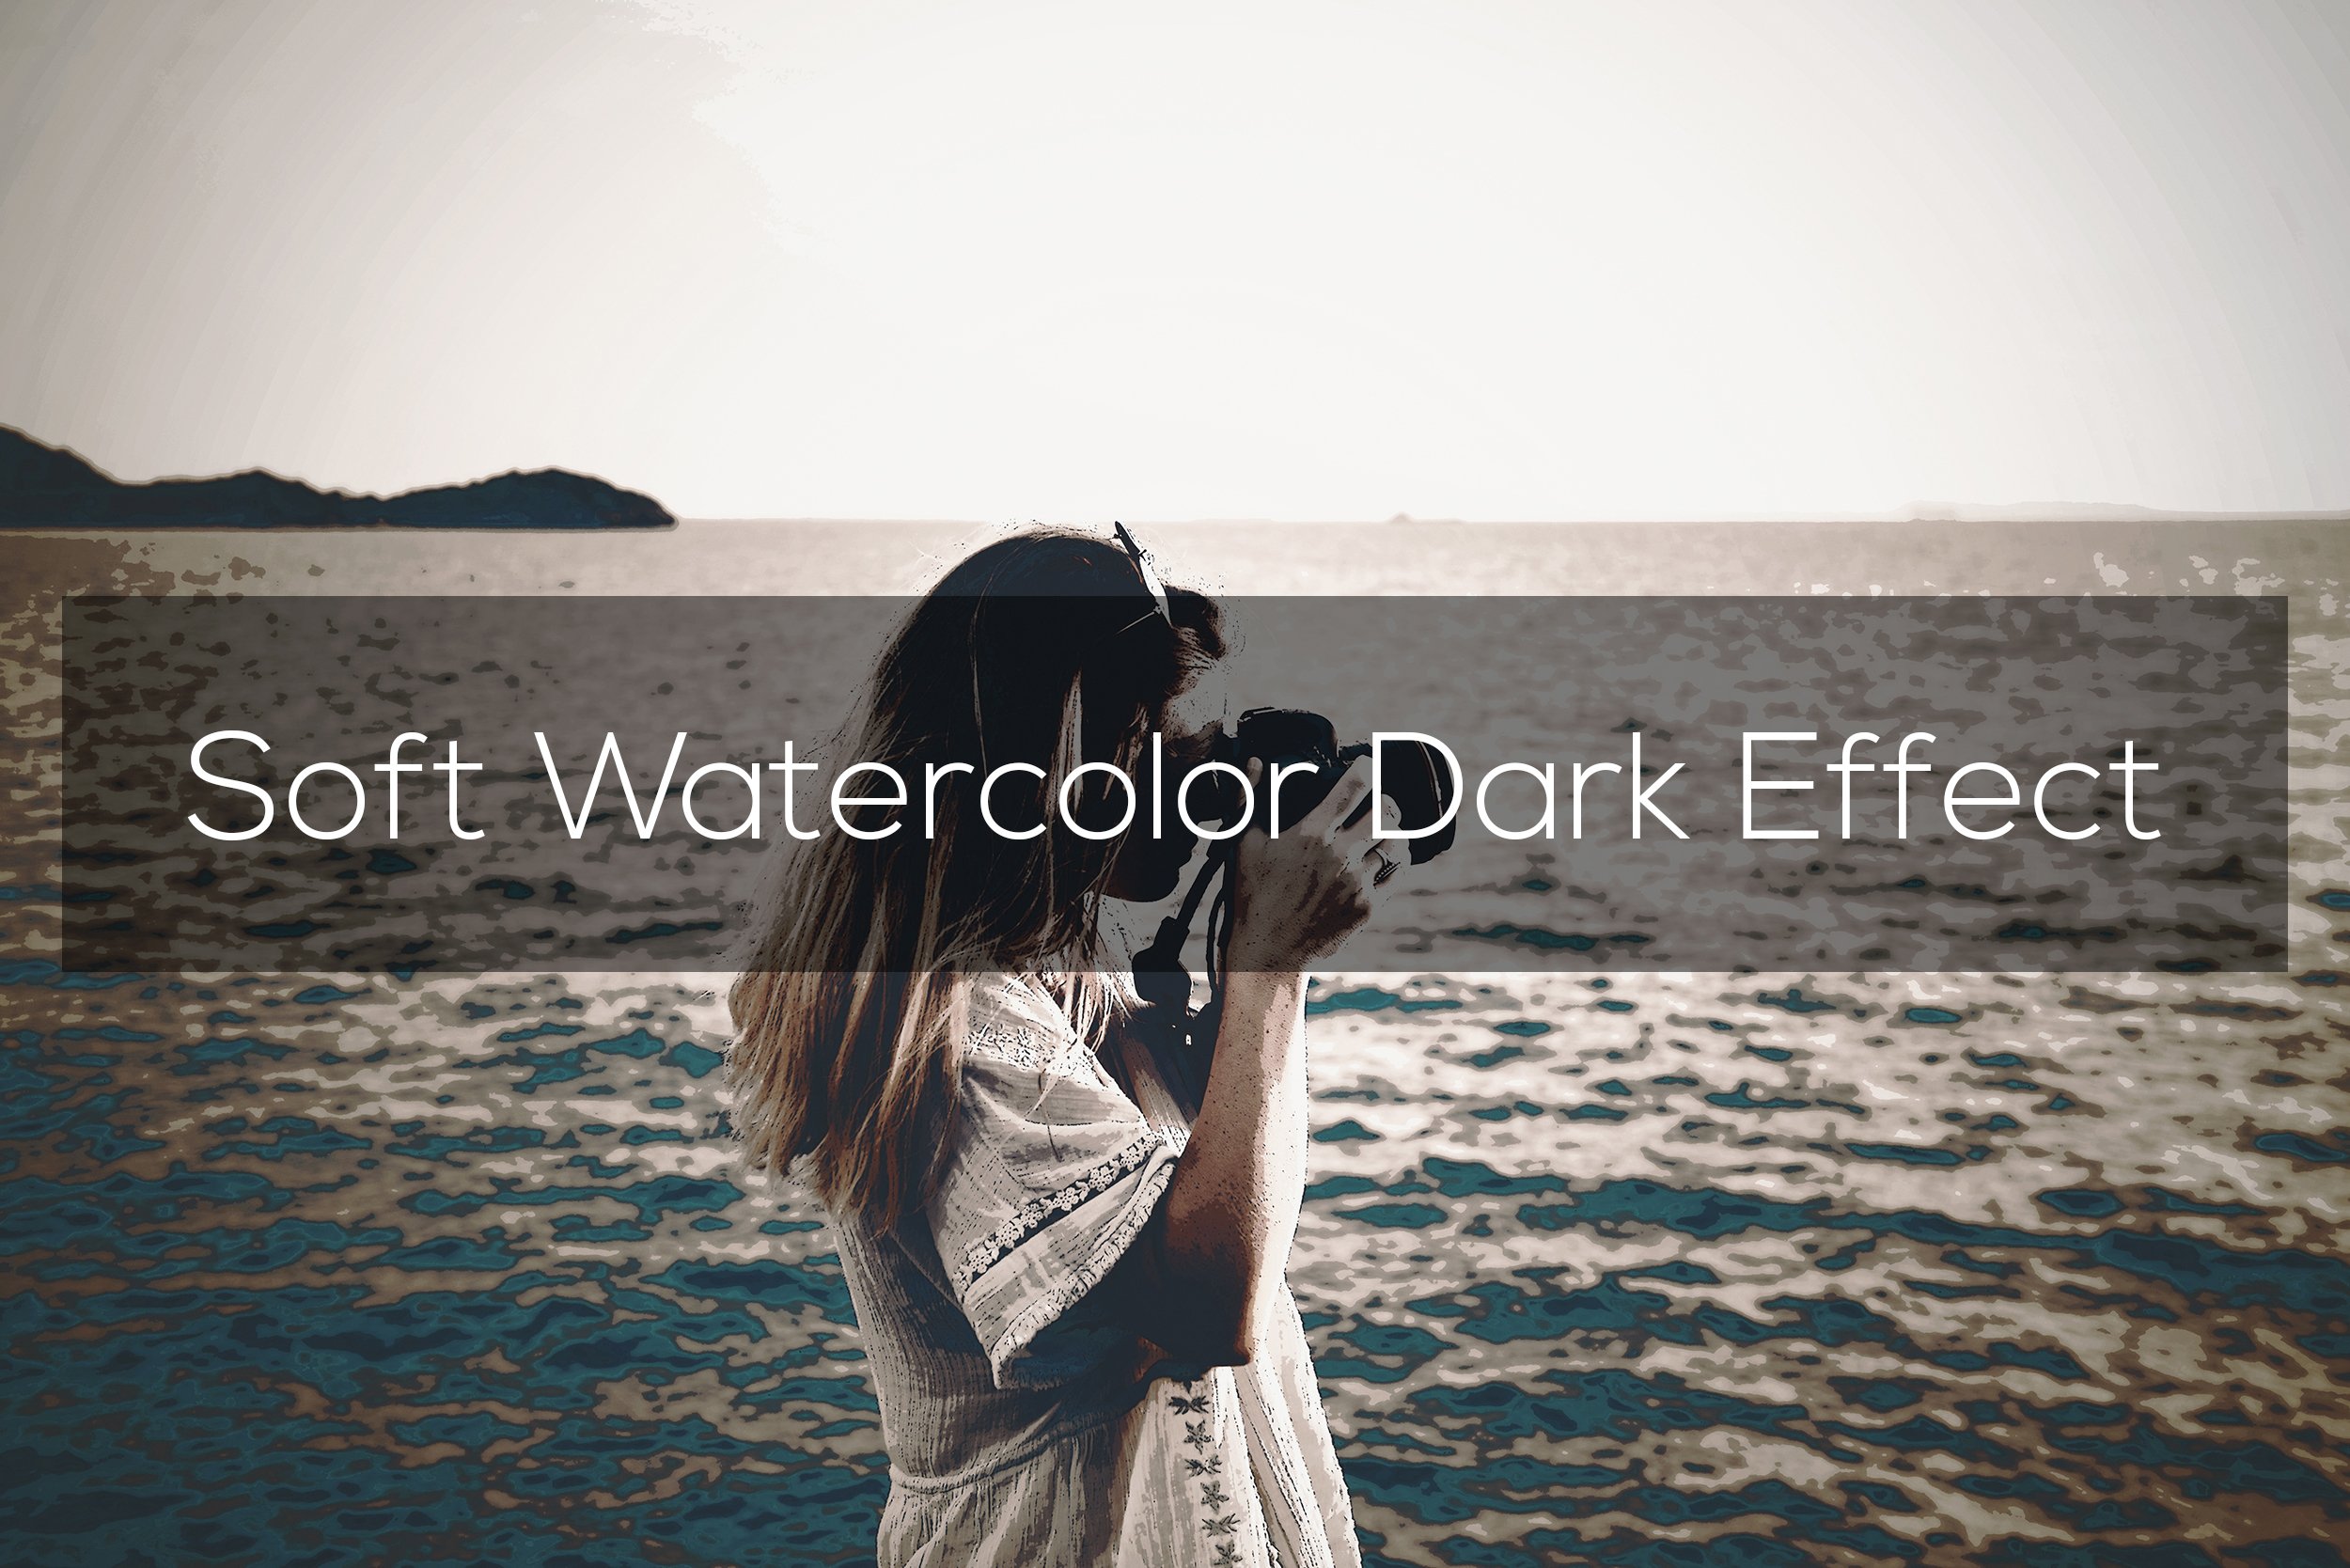 Soft Watercolor Dark Effectcover image.